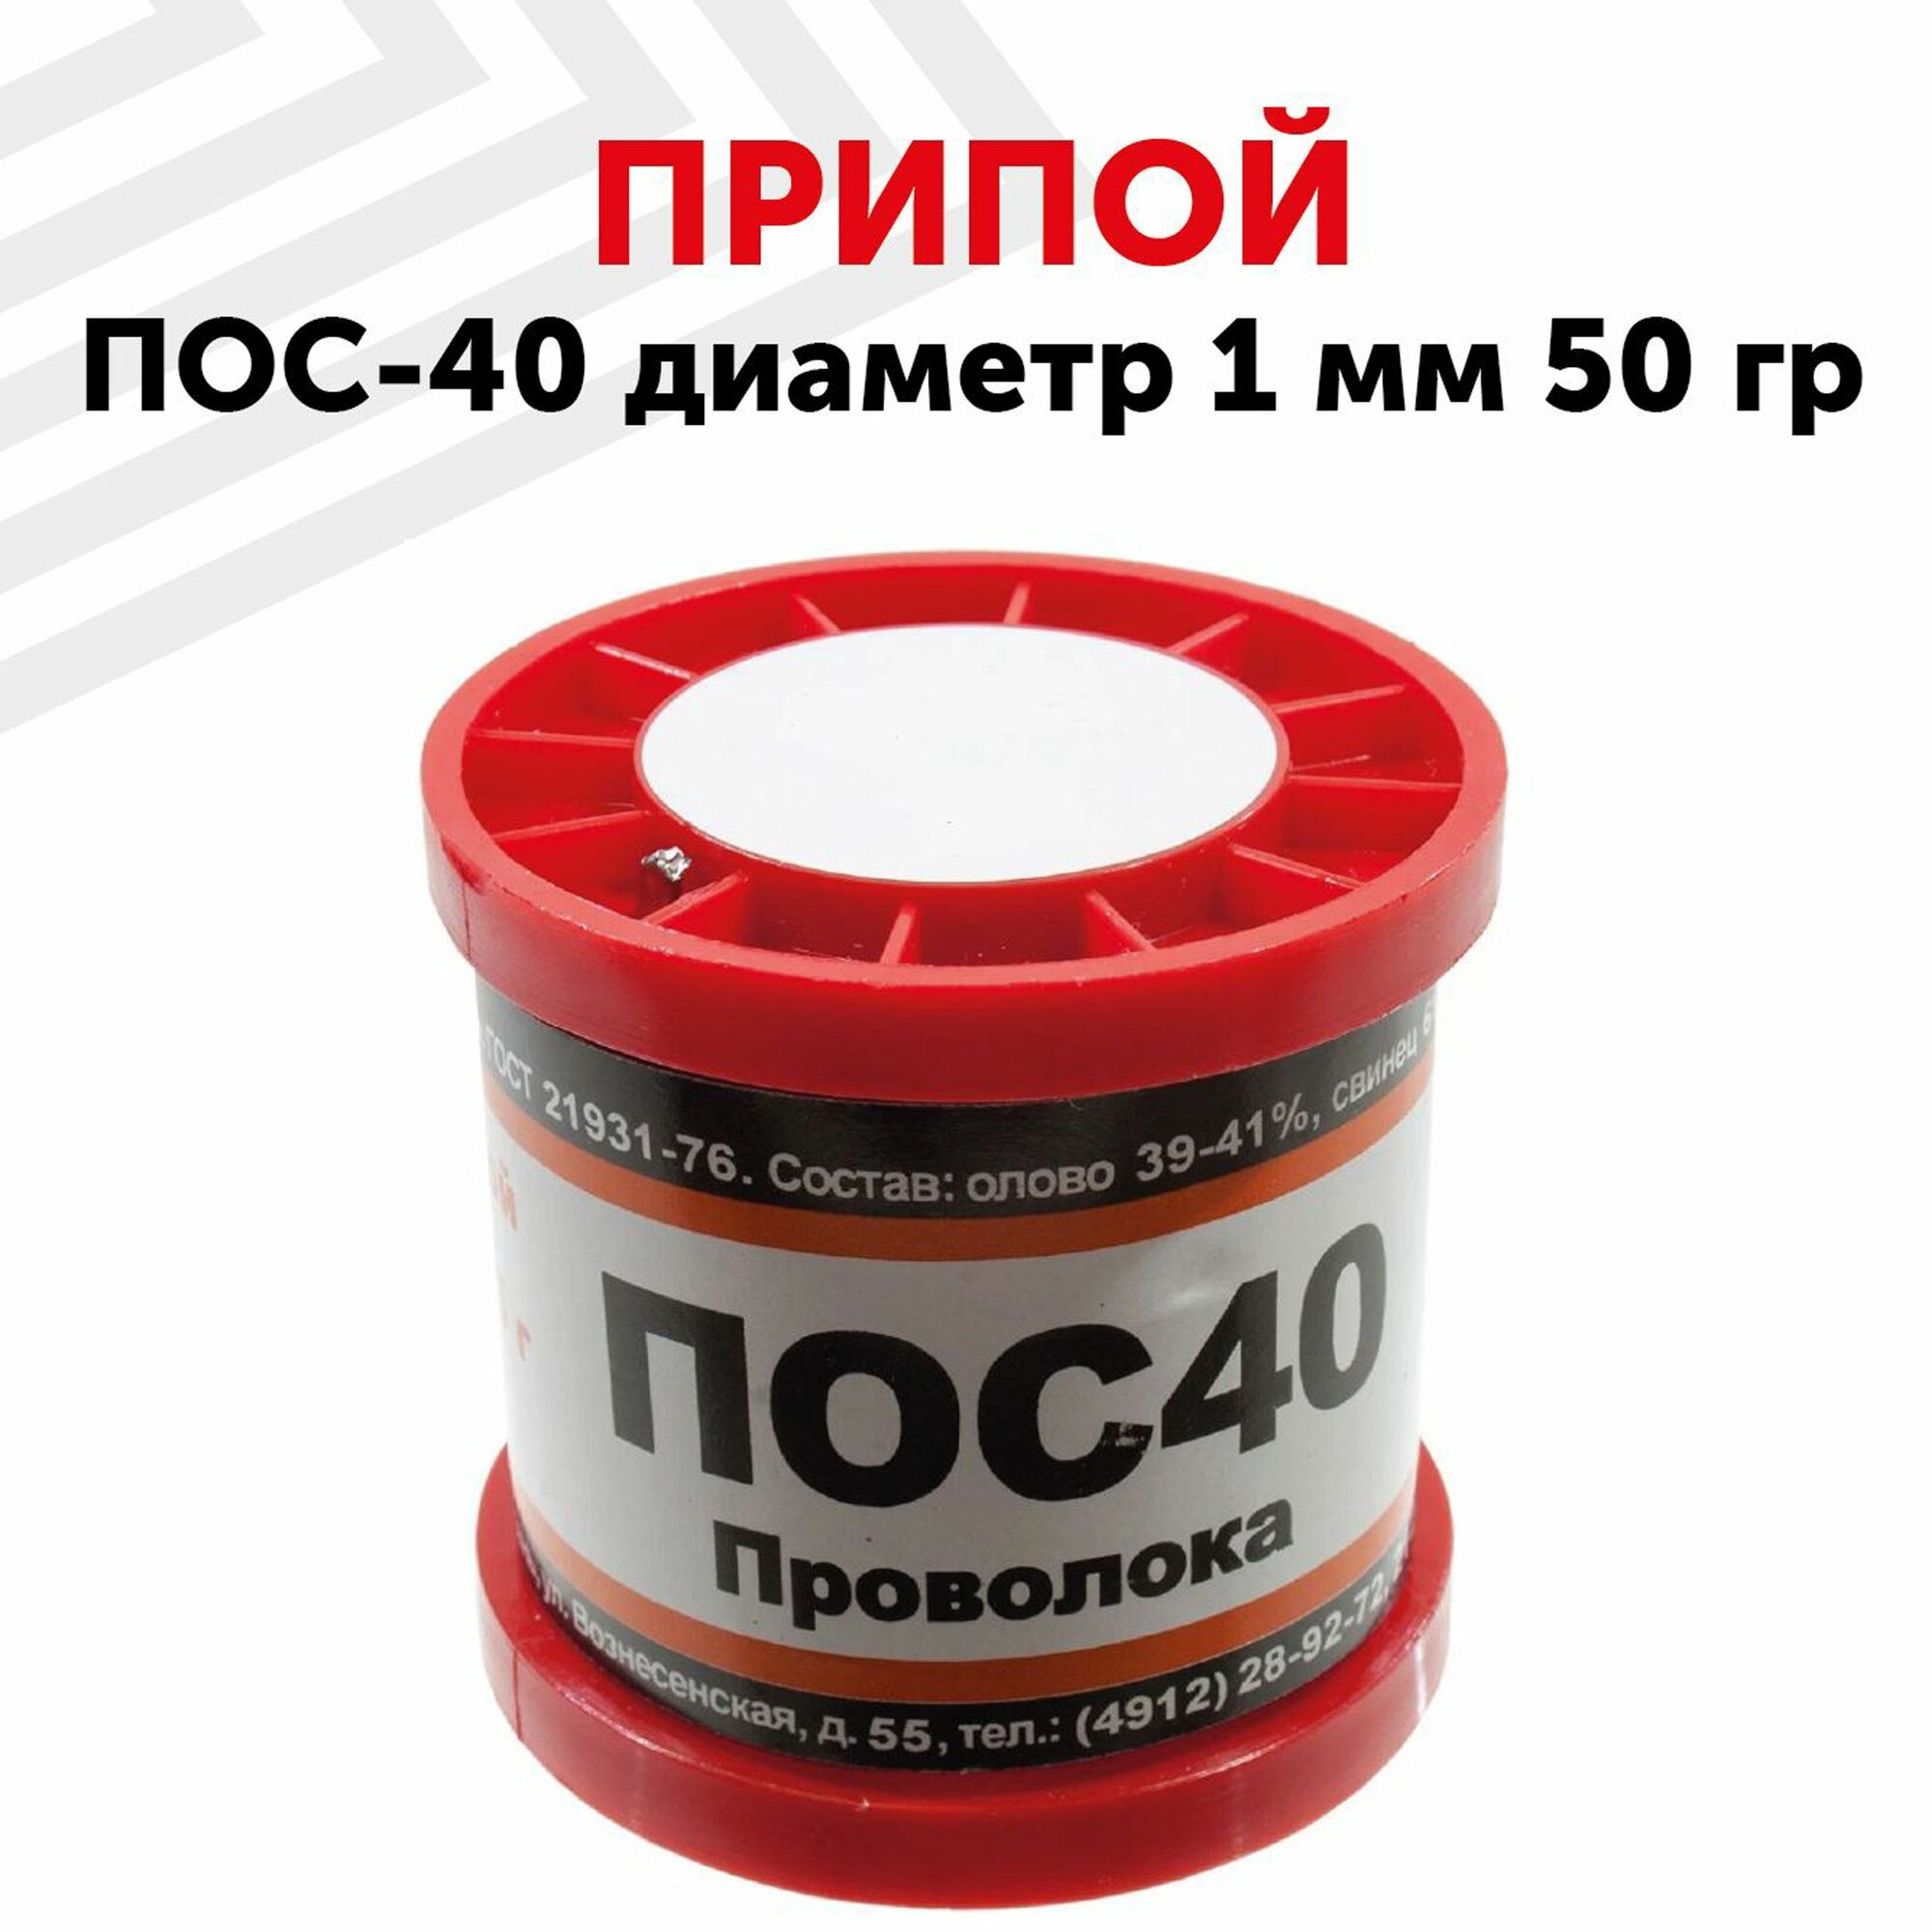 Припой ПОС-40 диаметром 1 мм, 50 гр.